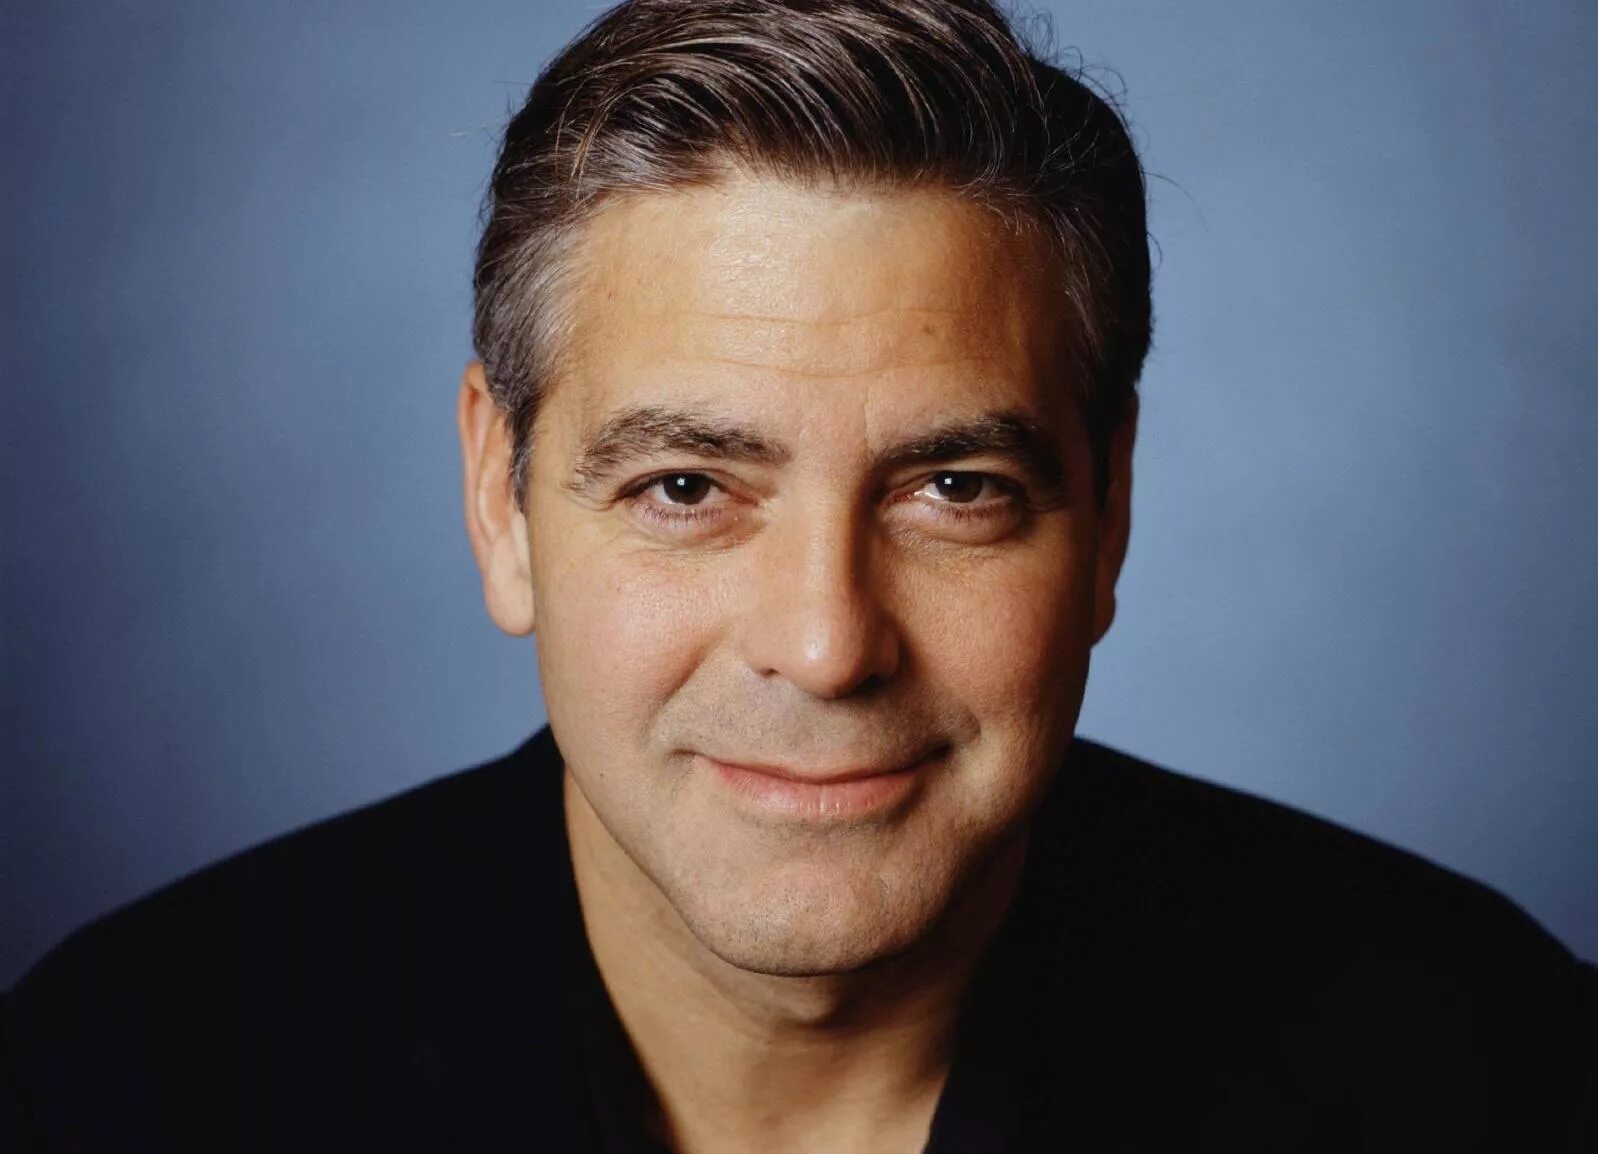 Джордж Клуни фото. Джордж Клуни 1997. Джордж Клуни молодой. Джордж Клуни зубы.